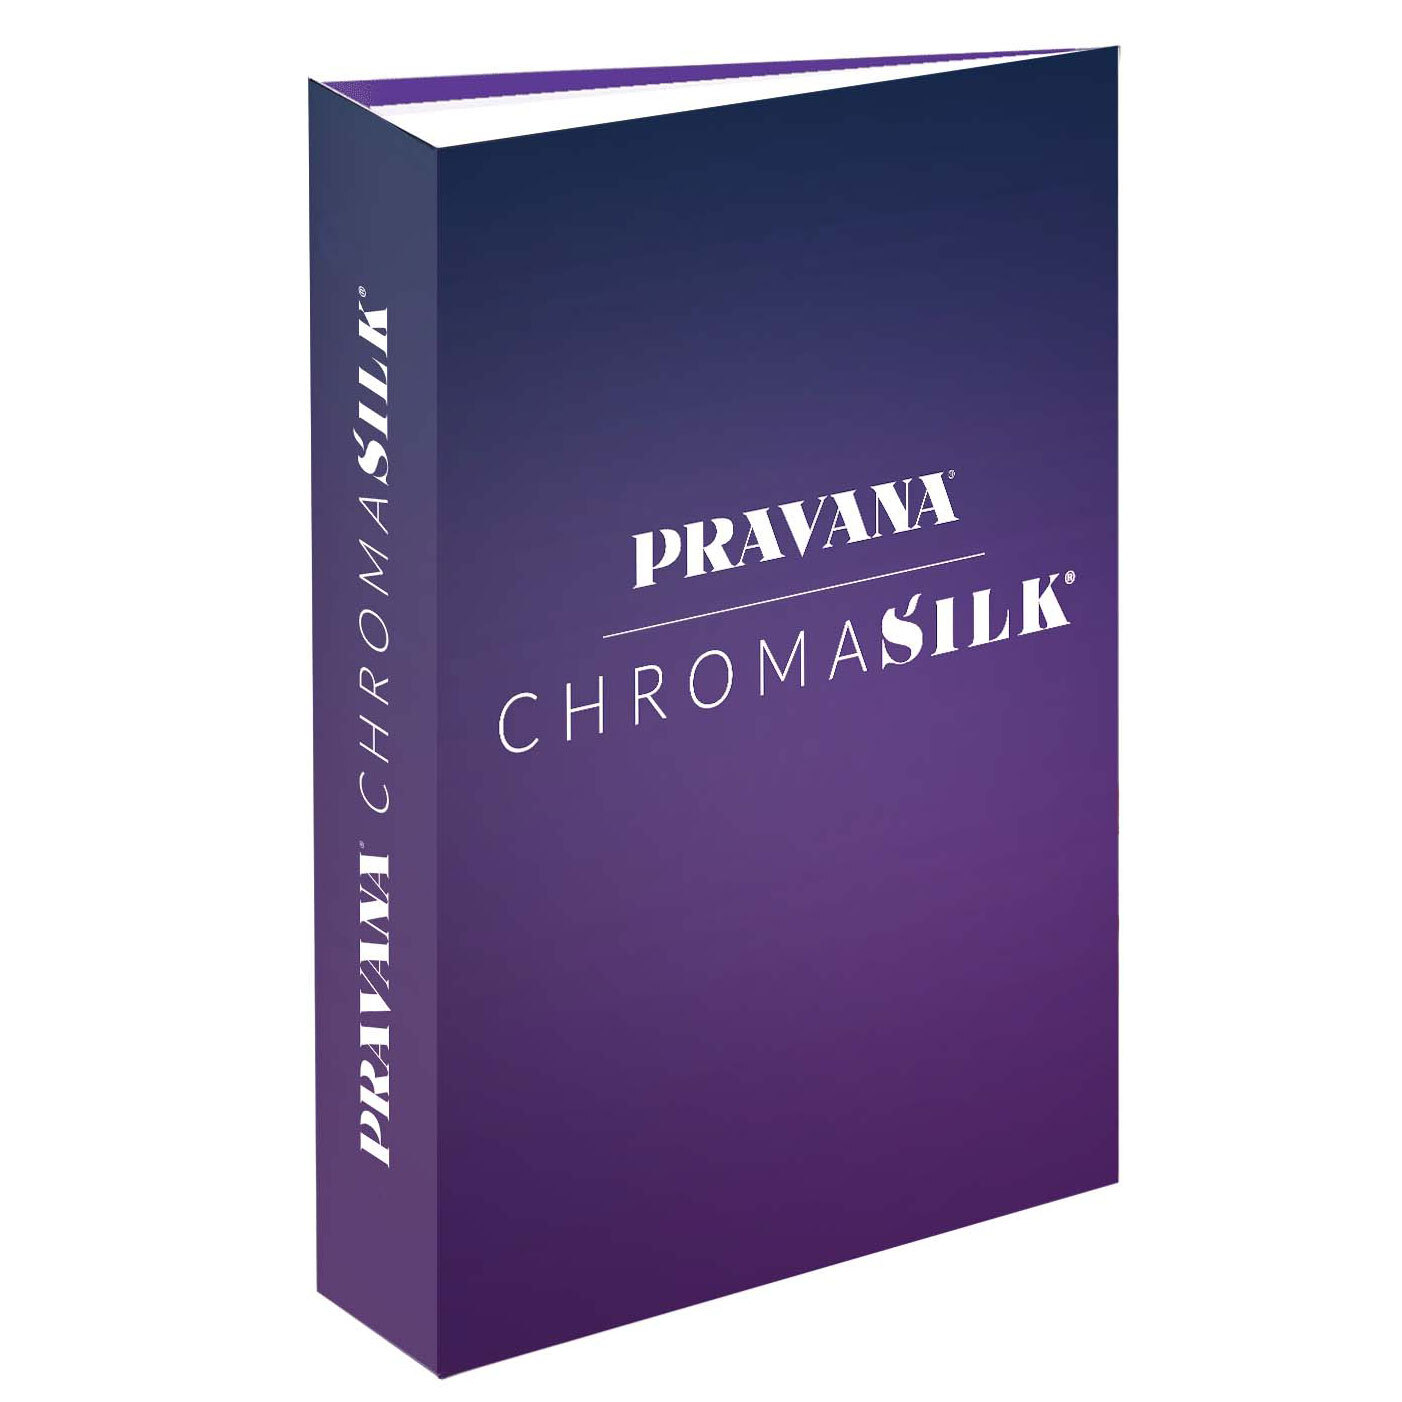 Pravana XTRAS: ChromaSilk Swatch Book 2021